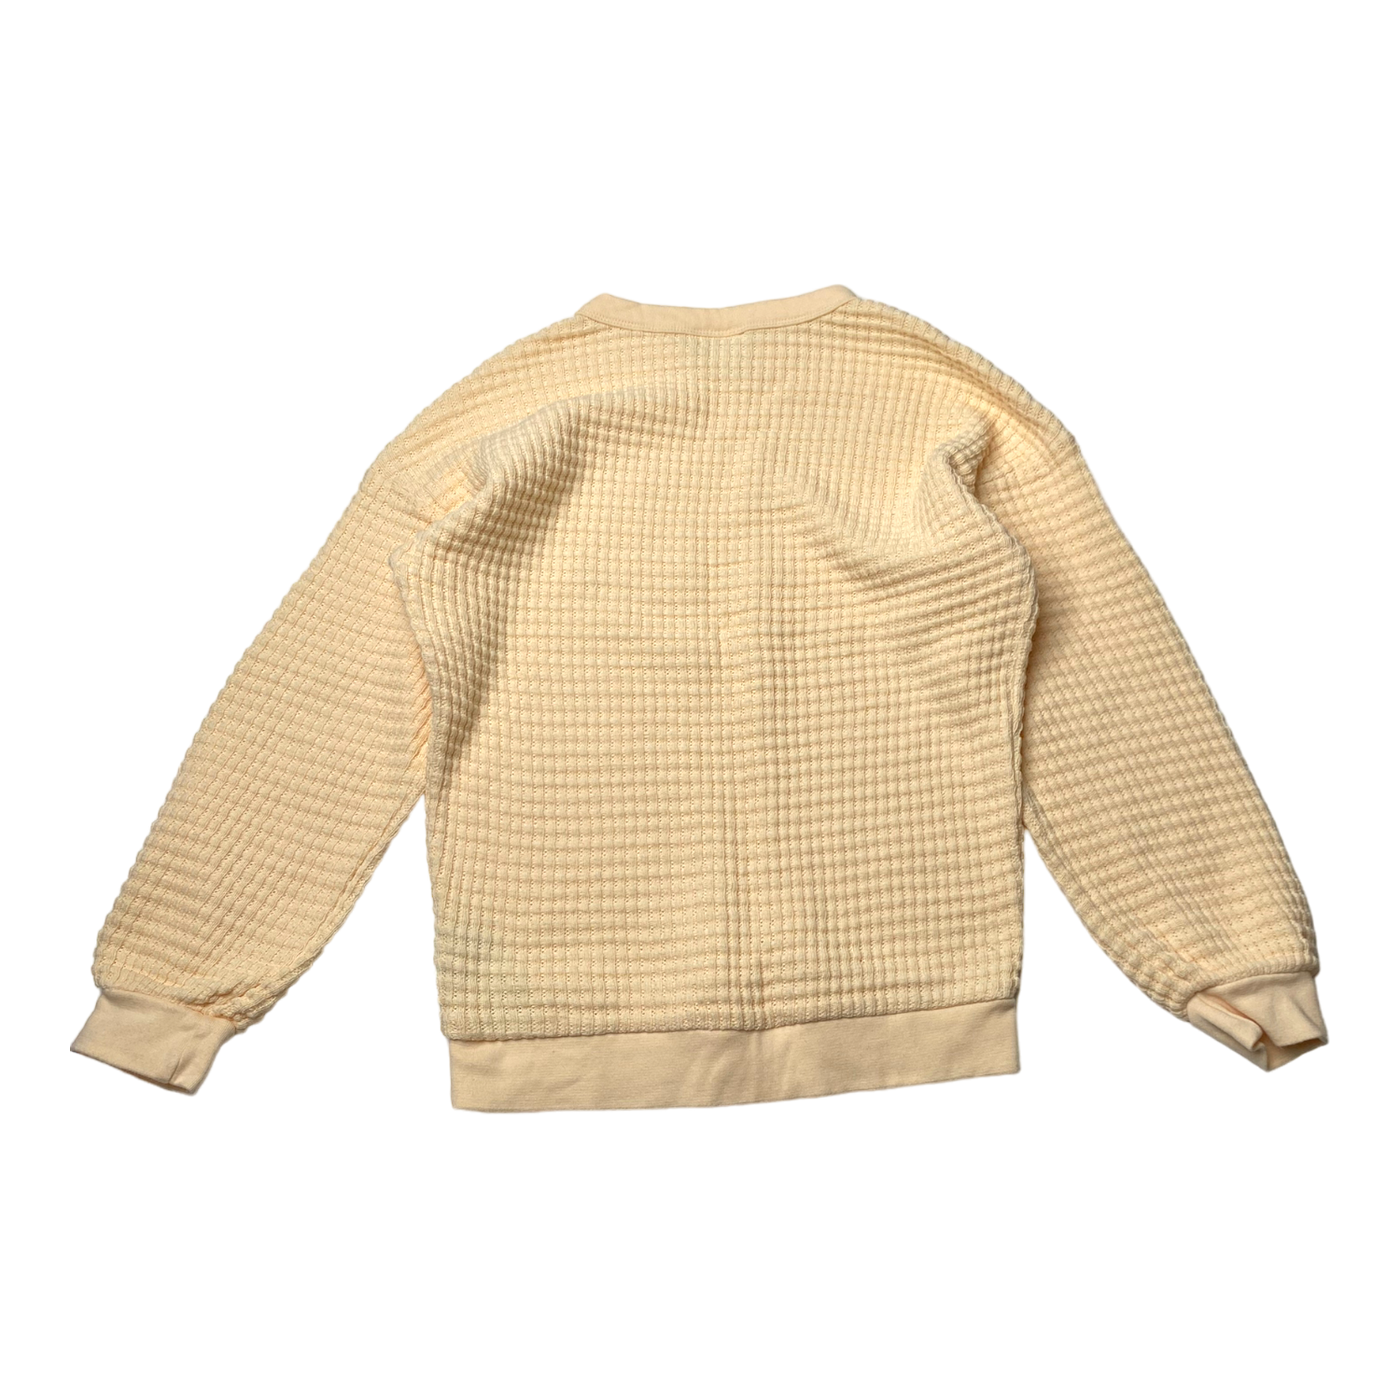 Mainio stellar knit, lemon chiffon | 134/140cm